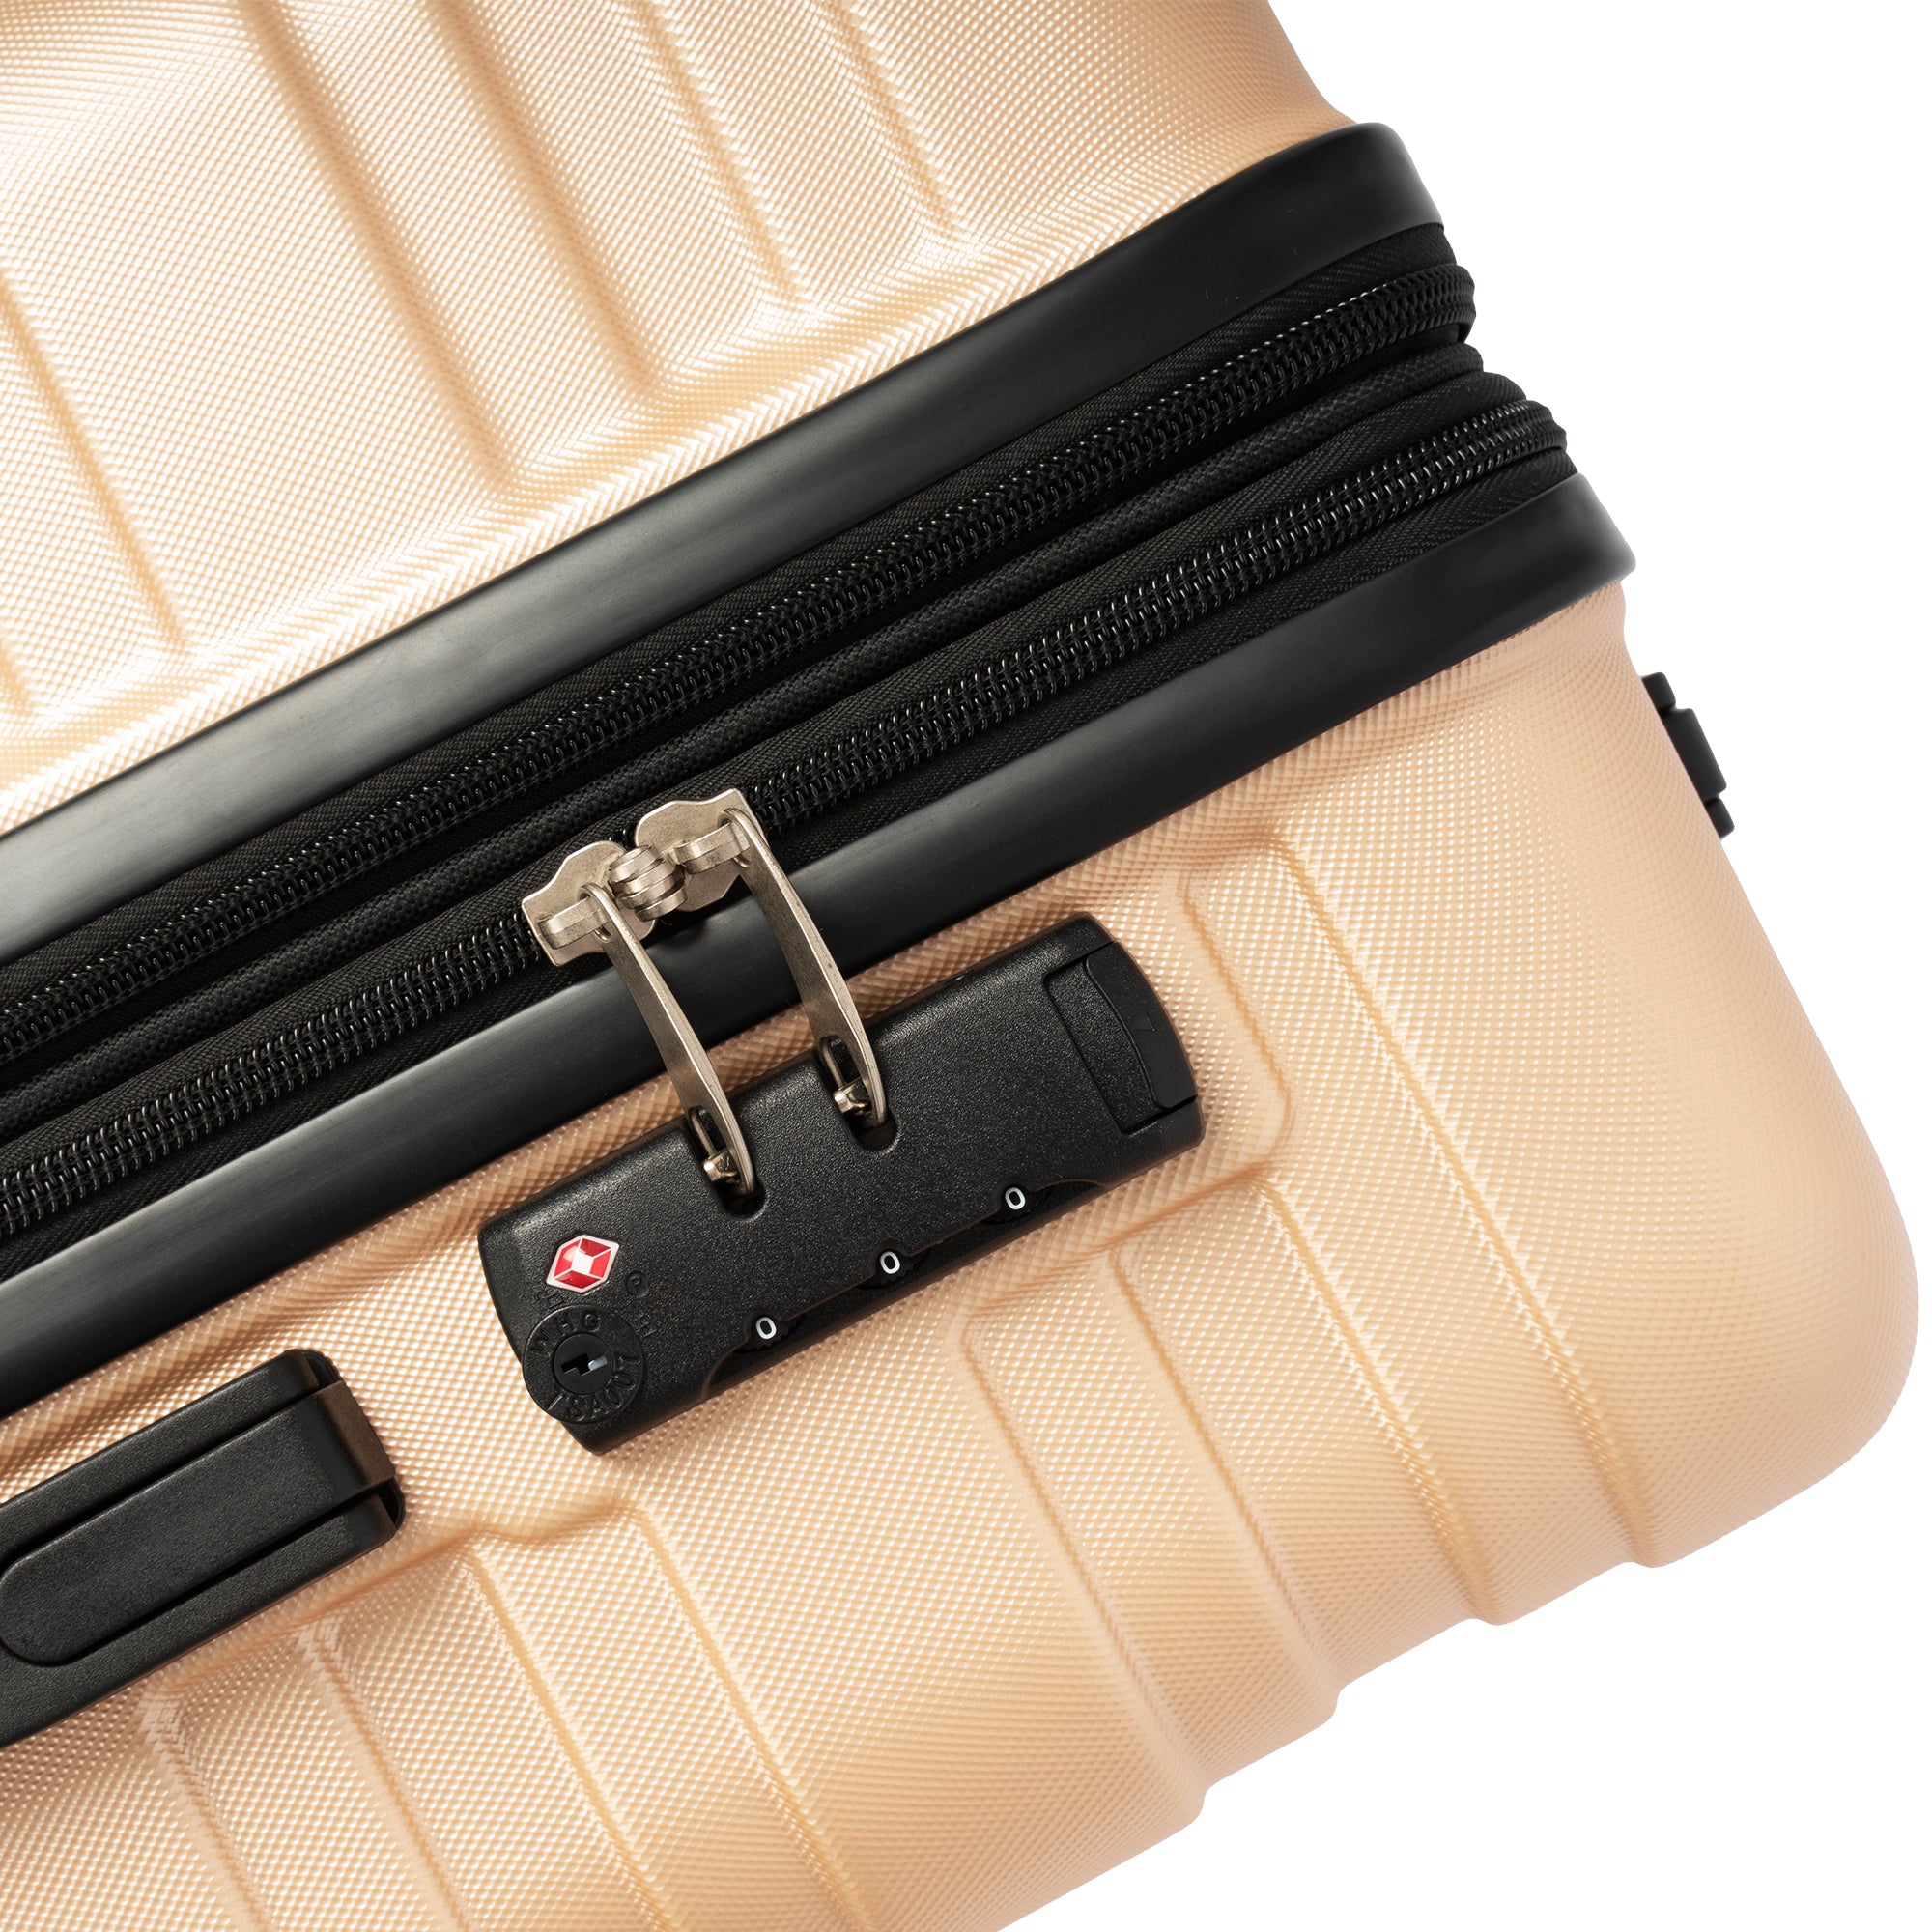 Merax Luggage with TSA Lock Spinner Wheels Hardside rose gold-abs